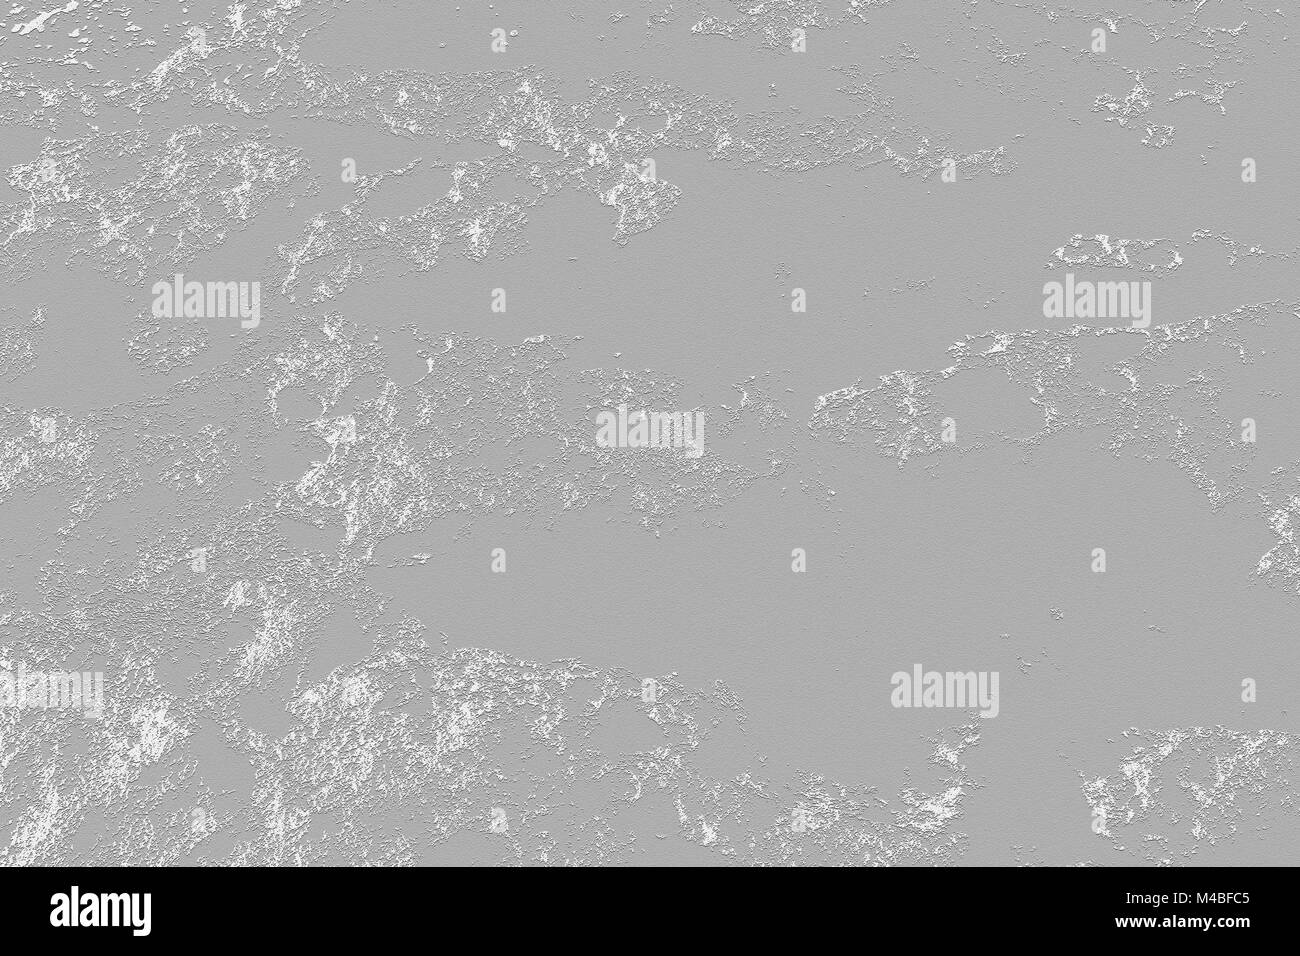 Black and white grey sand desert textured background Stock Photo